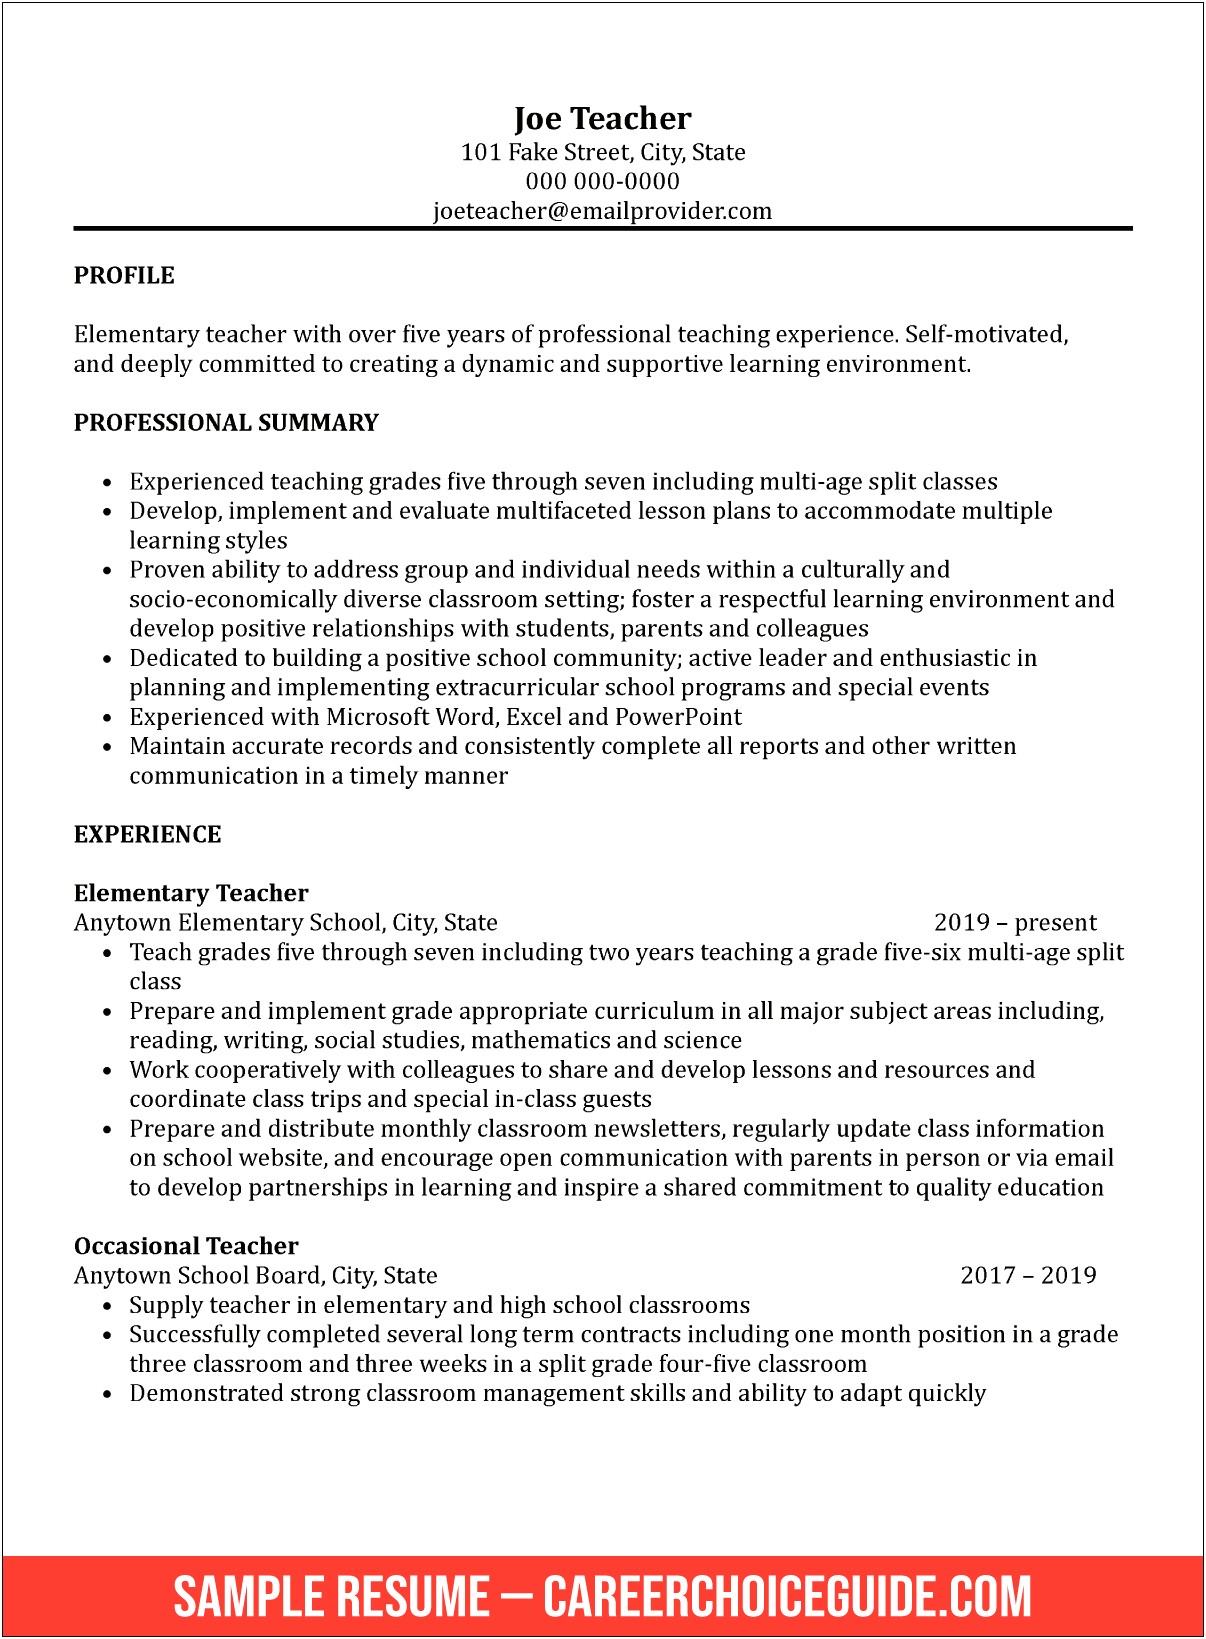 Sample Of Professional Profile On Resume